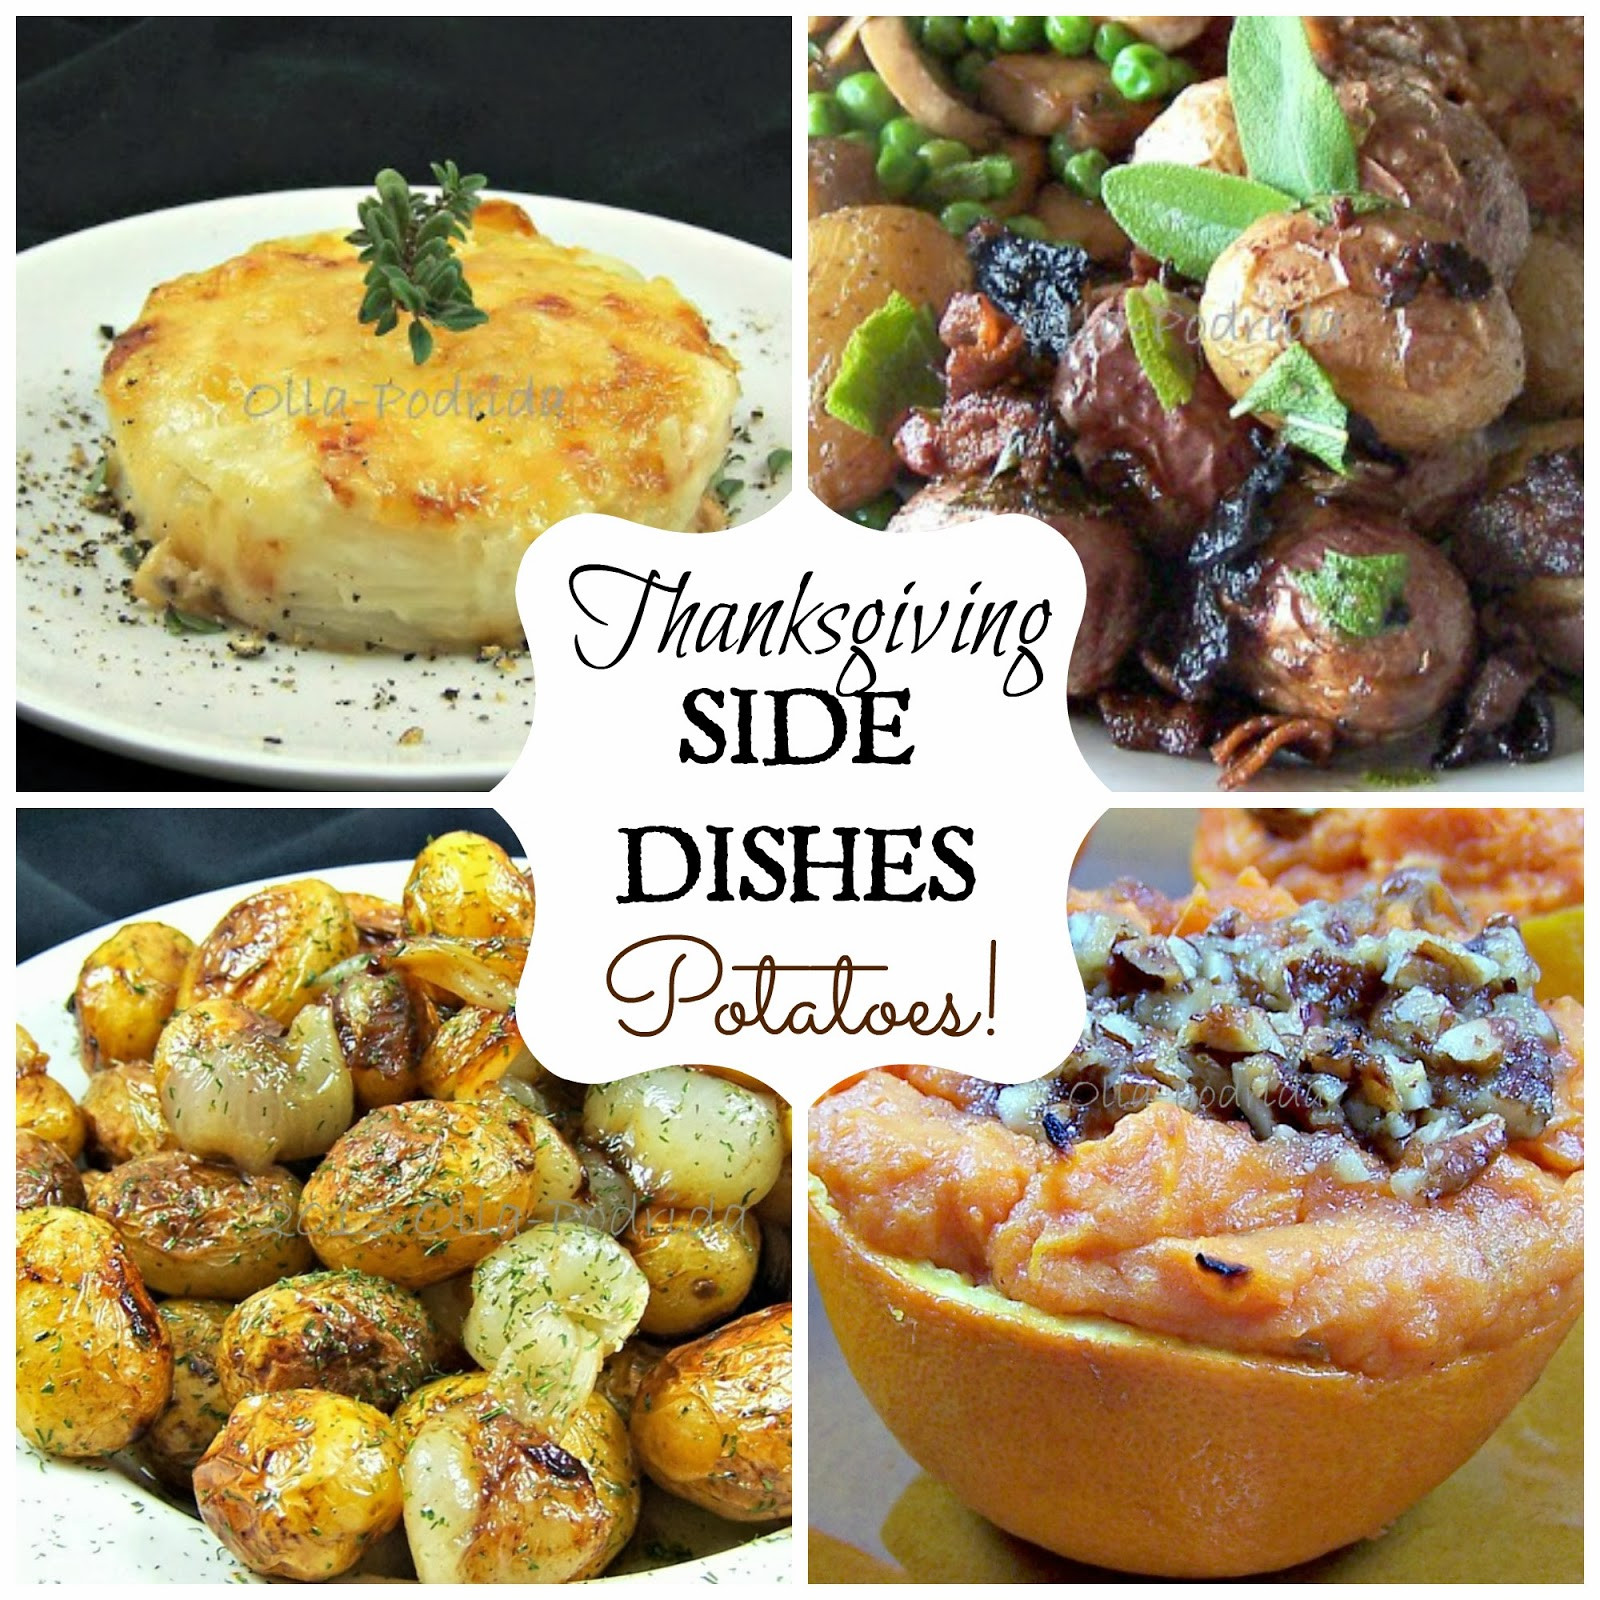 Potatoes Thanksgiving Side Dishes
 Olla Podrida Thanksgiving Side Dishes Potatoes